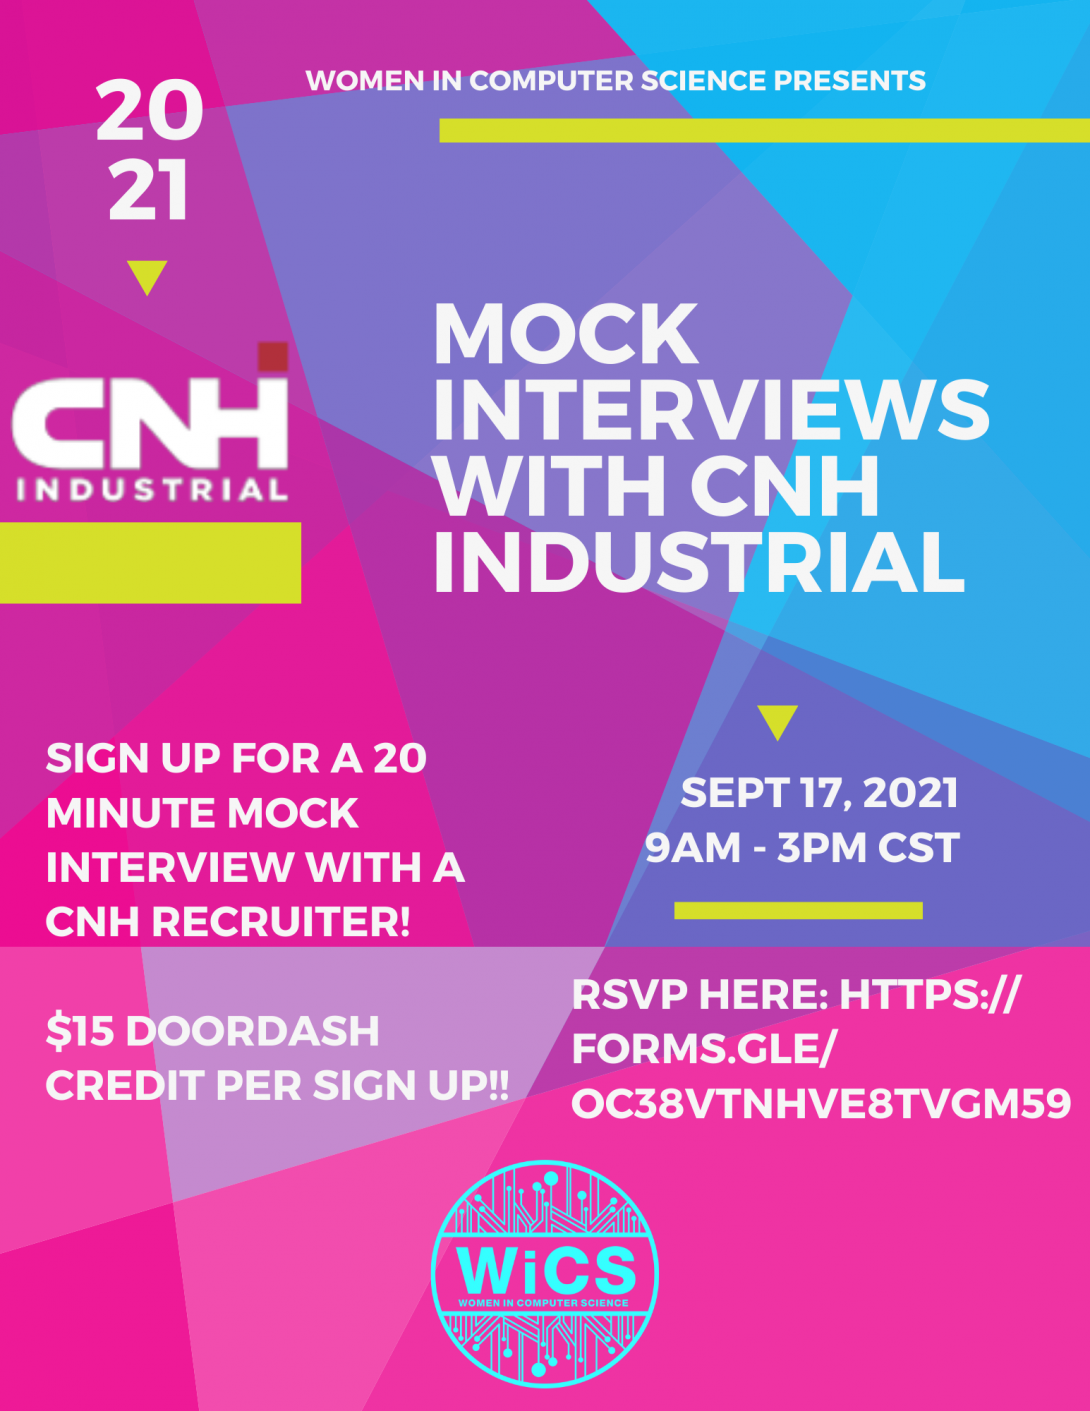 WiCS hosts CNH Industrial: Mock Interviews